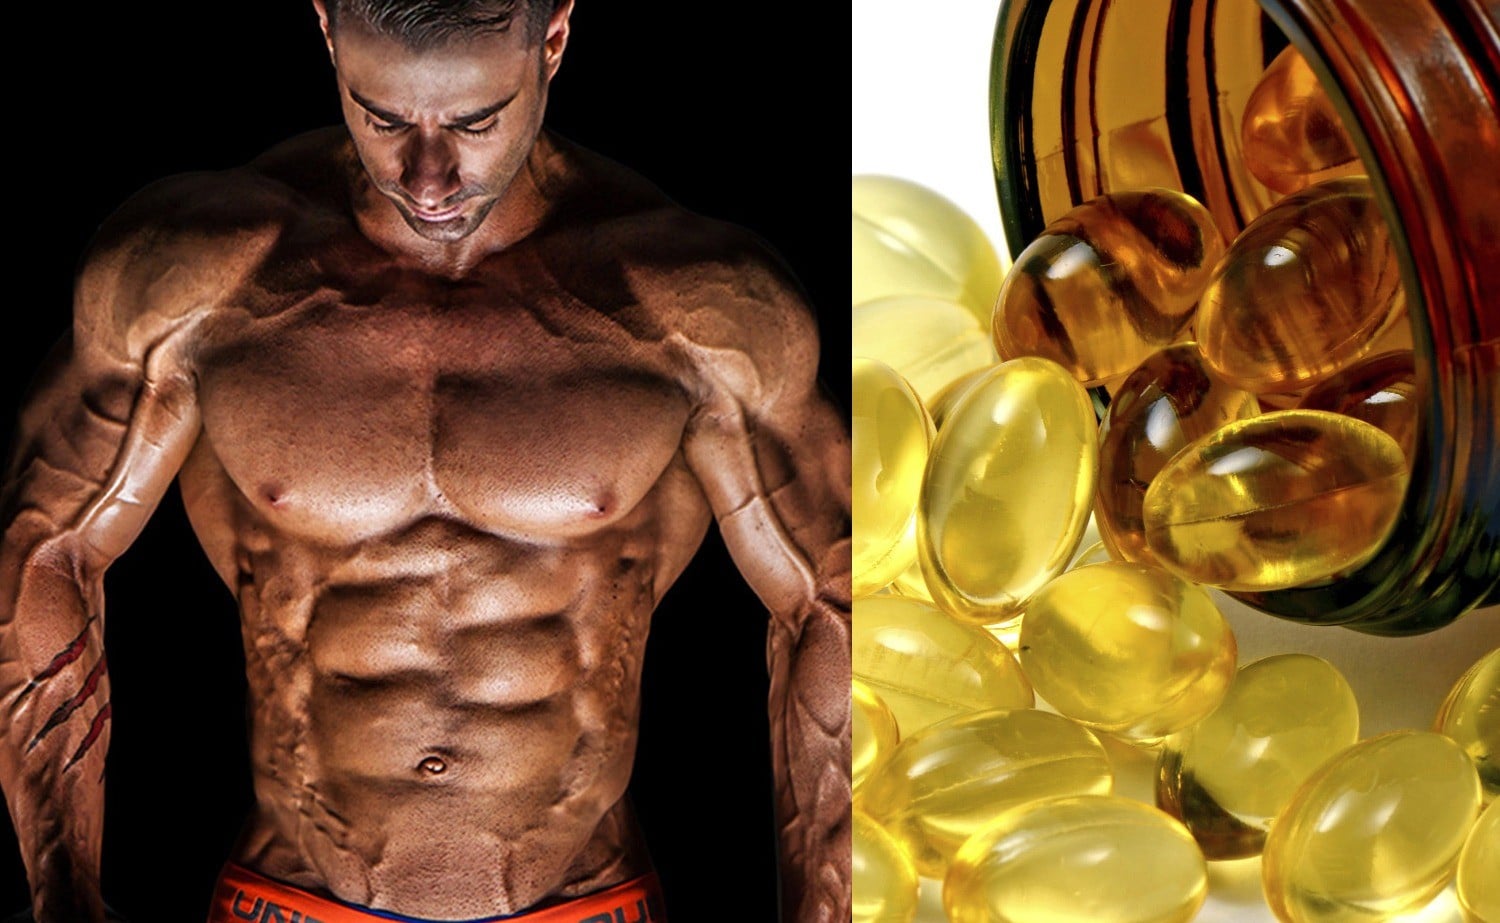 oil for bodybuilding